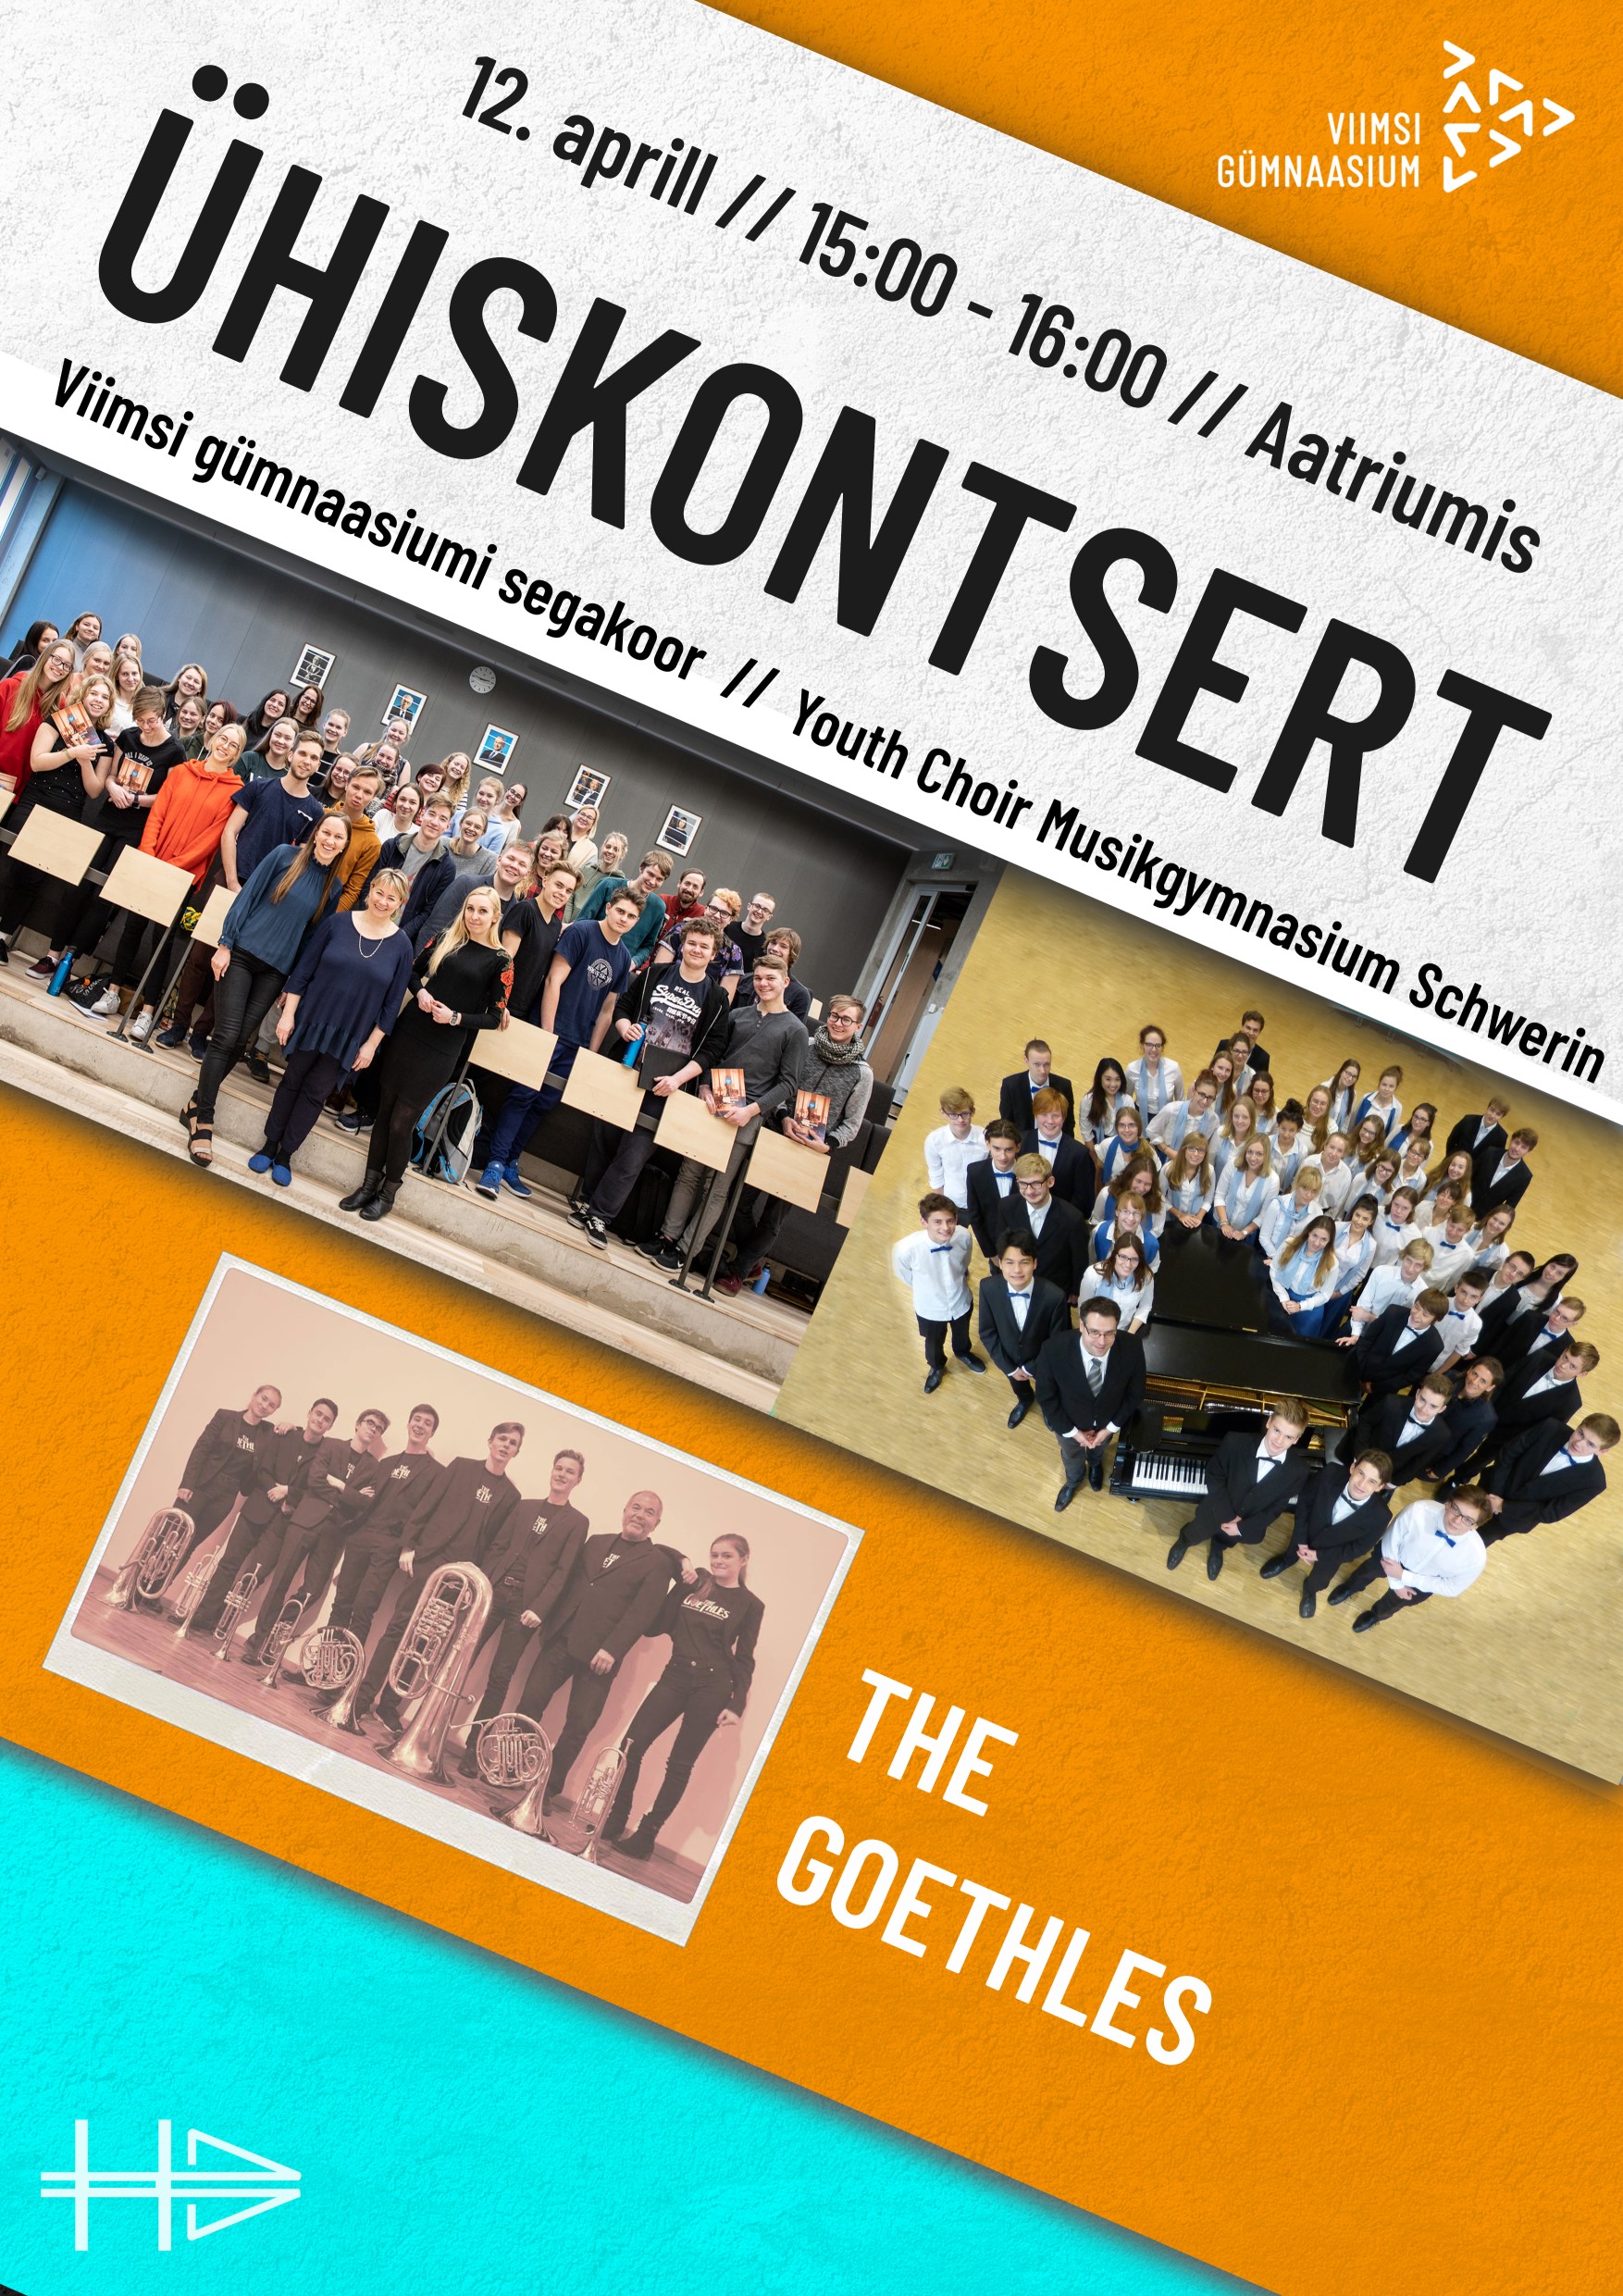 You are currently viewing Goethegymnasiumi ja VGMi ühiskontsert